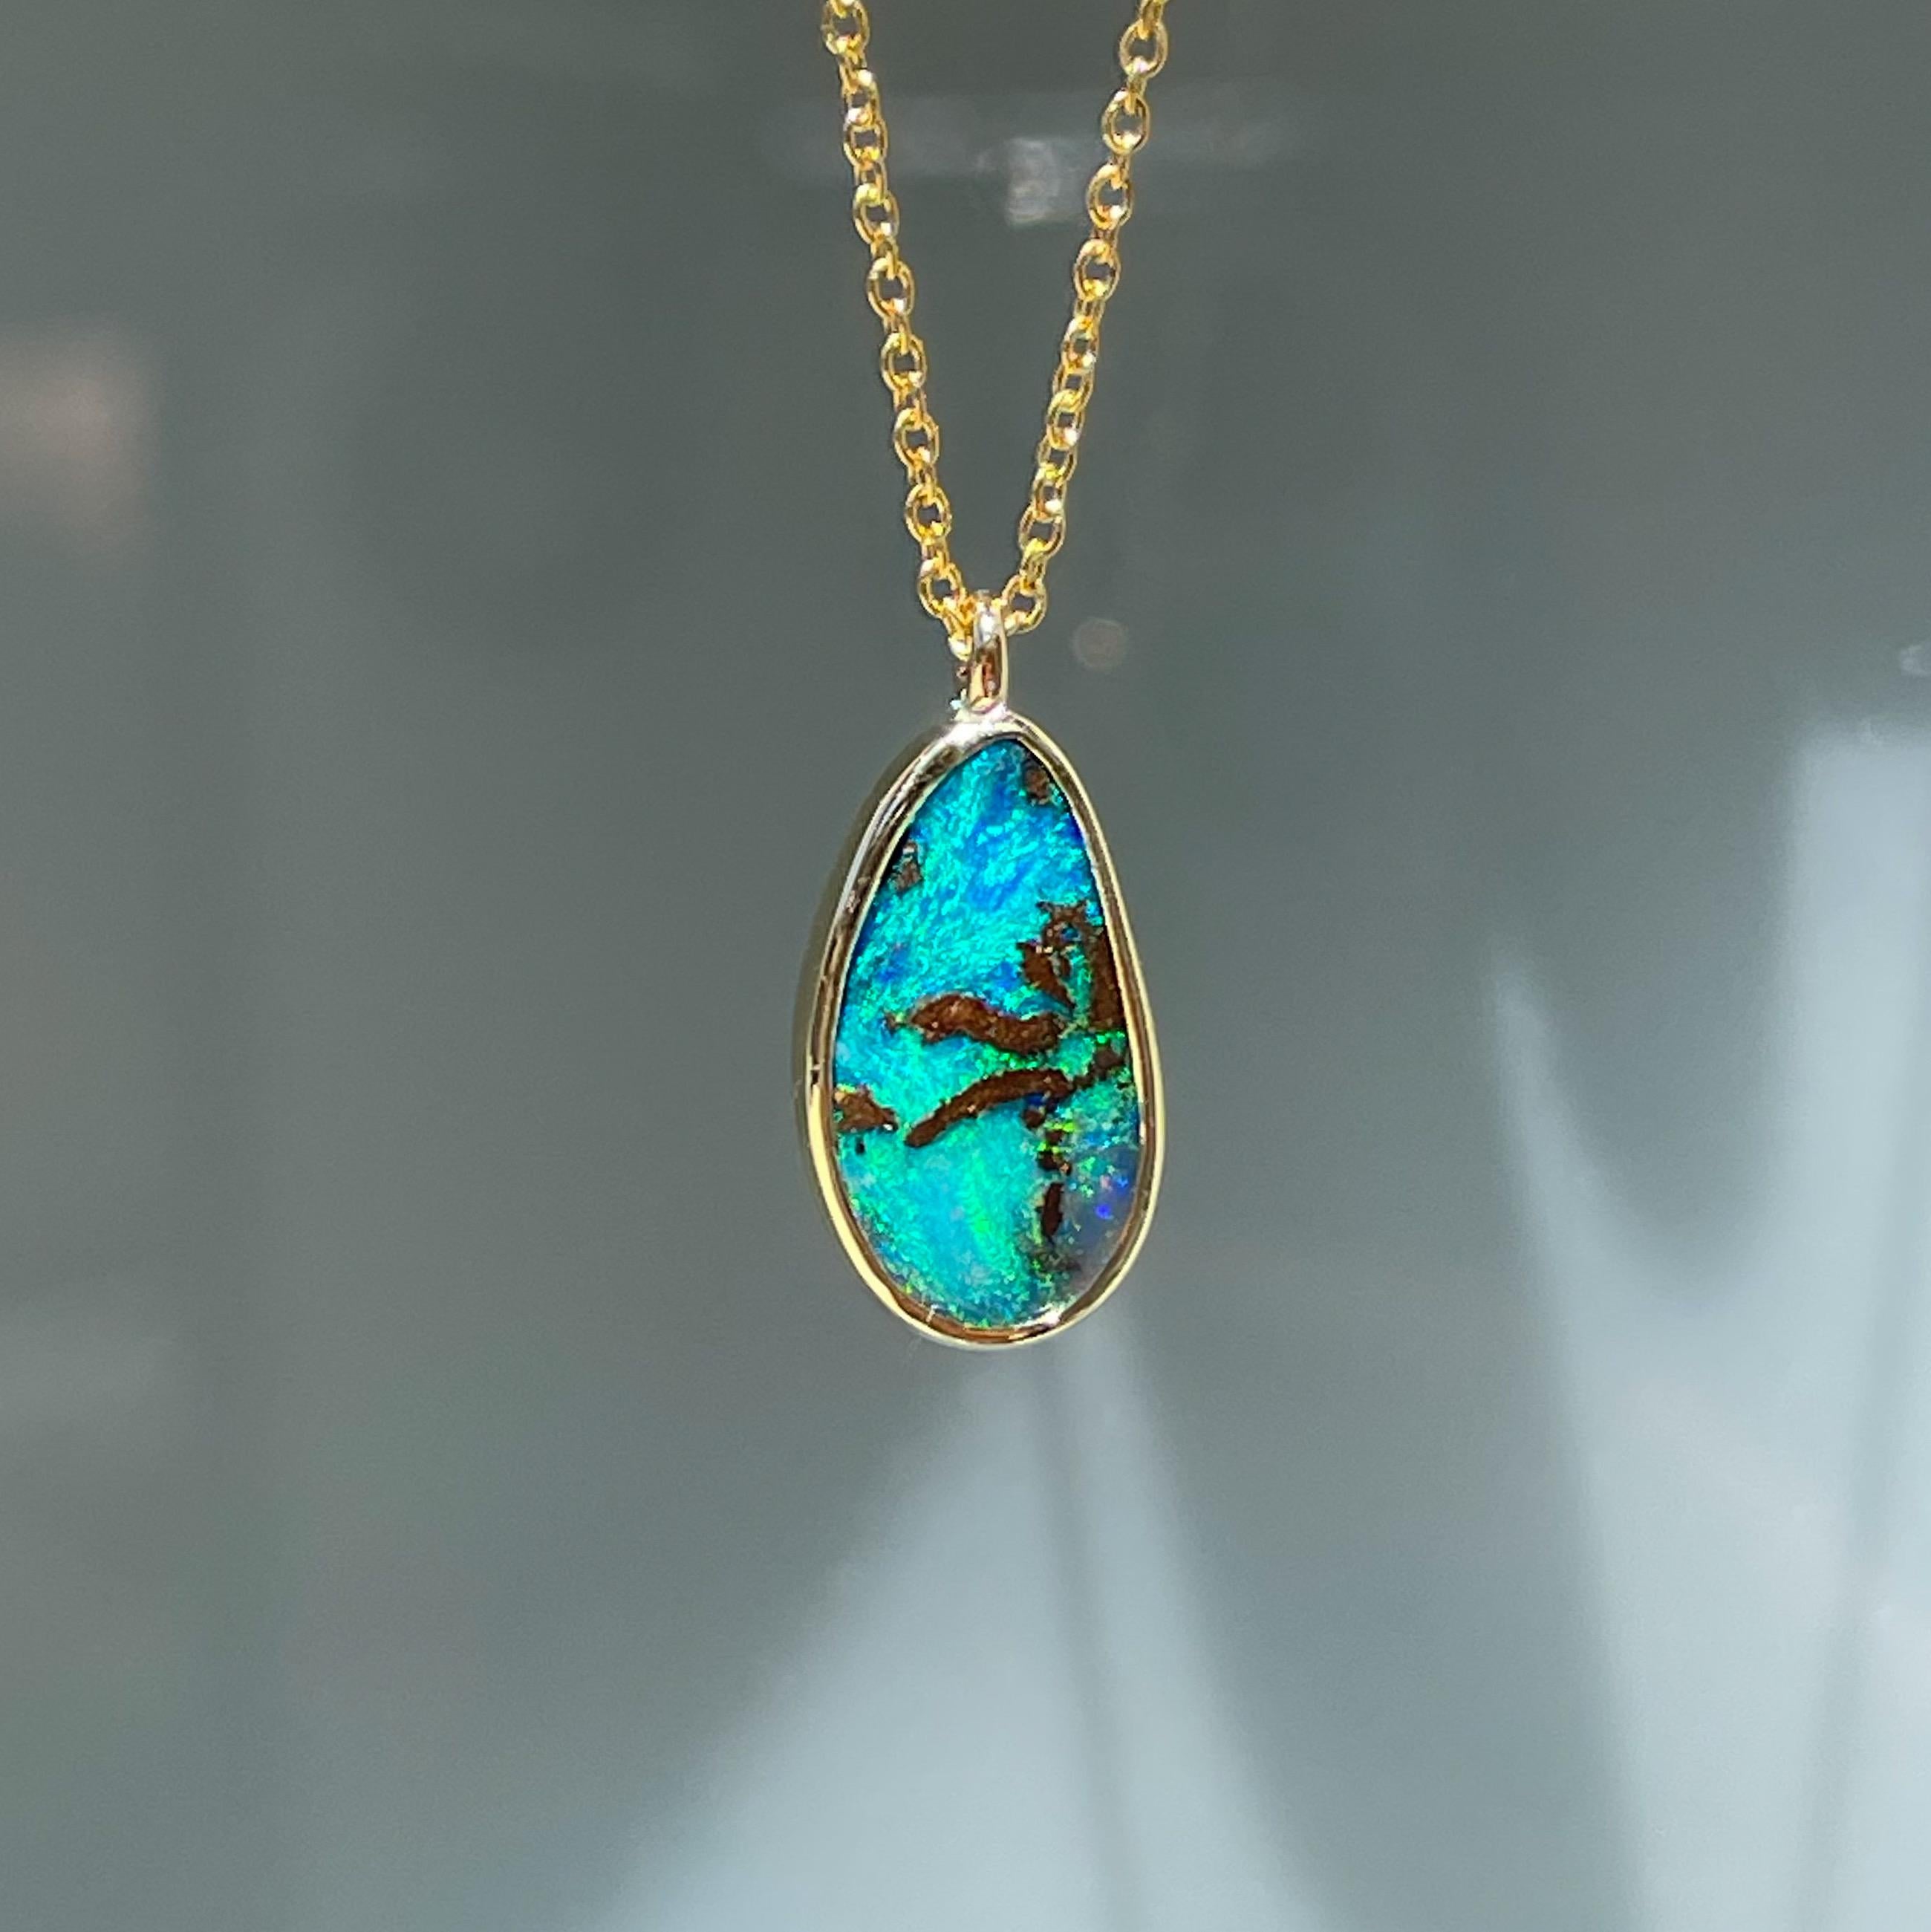 Contemporary NIXIN Jewelry Unicorn Tear Australian Opal Necklace No. 18 in 14k Gold For Sale